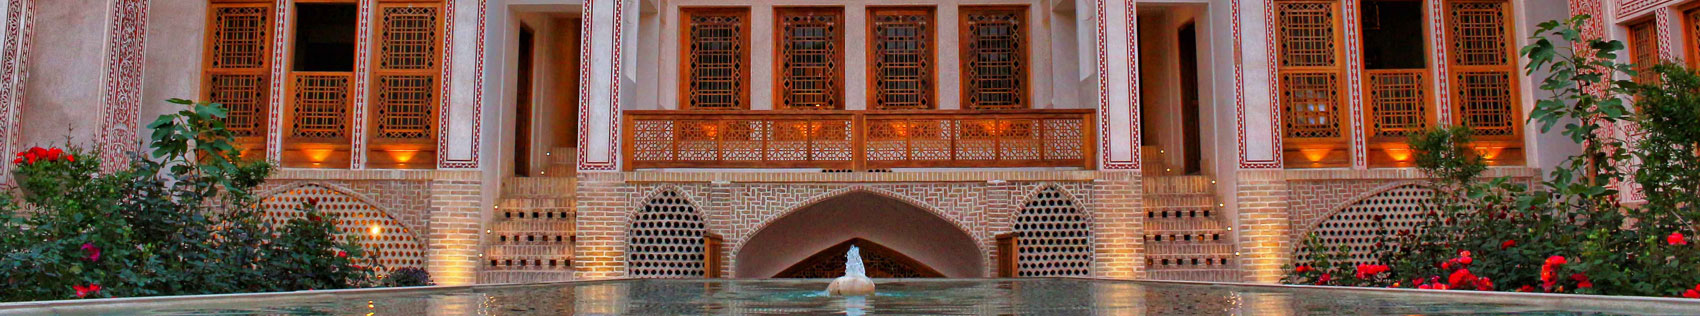 iran hotel reserve